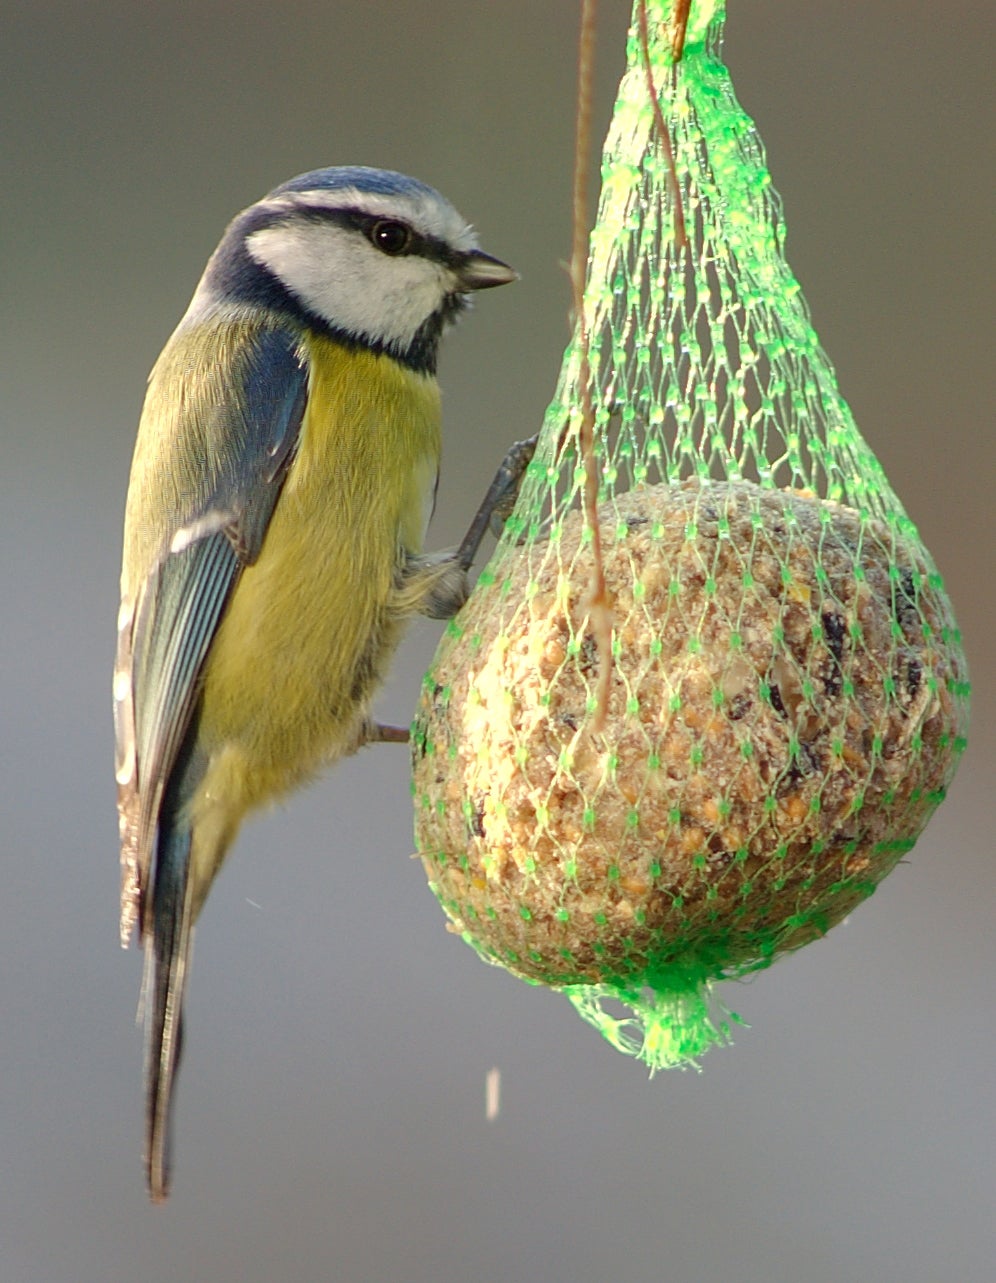 Bird at a homemade bird feeder